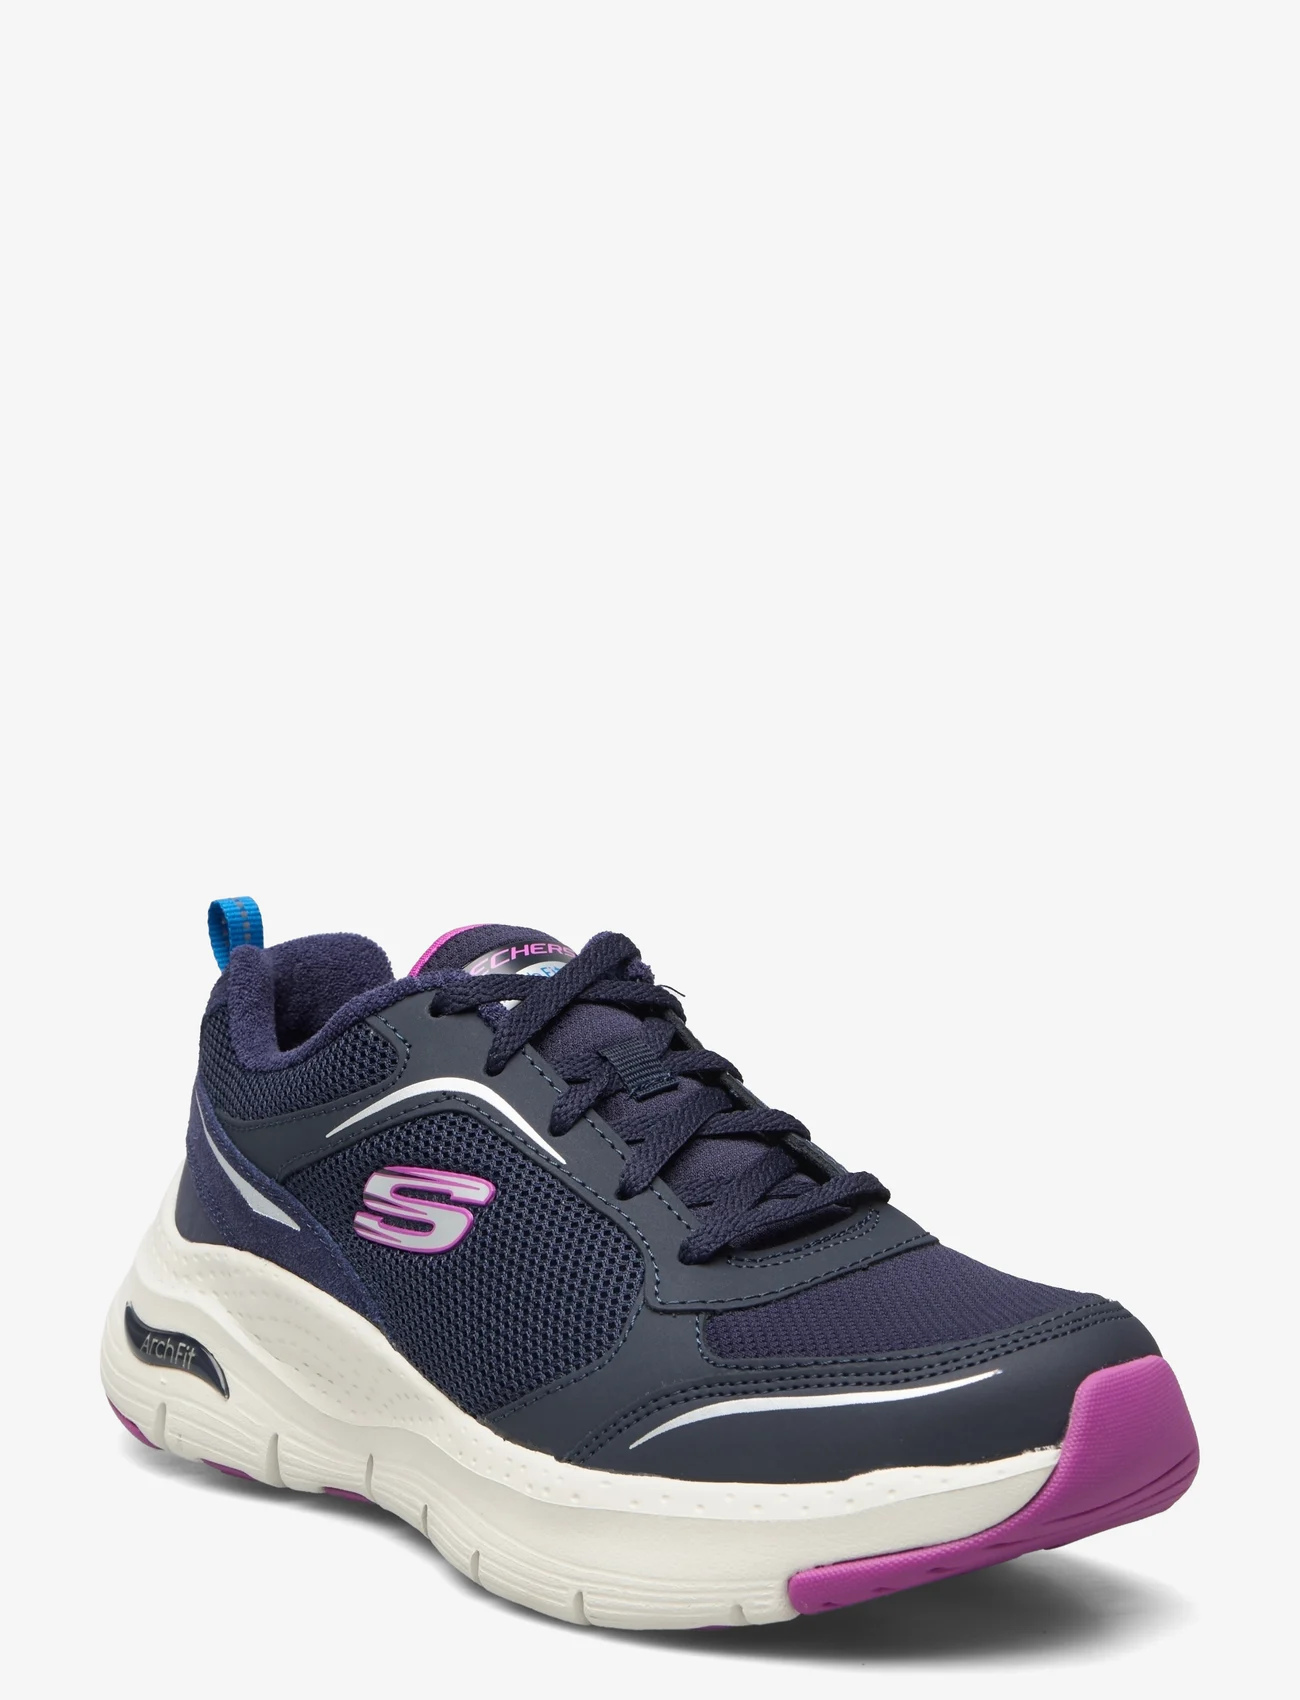 Skechers - Womens Arch Fit - Gentle Stride - sneakers med lavt skaft - nvpr navy purple - 0